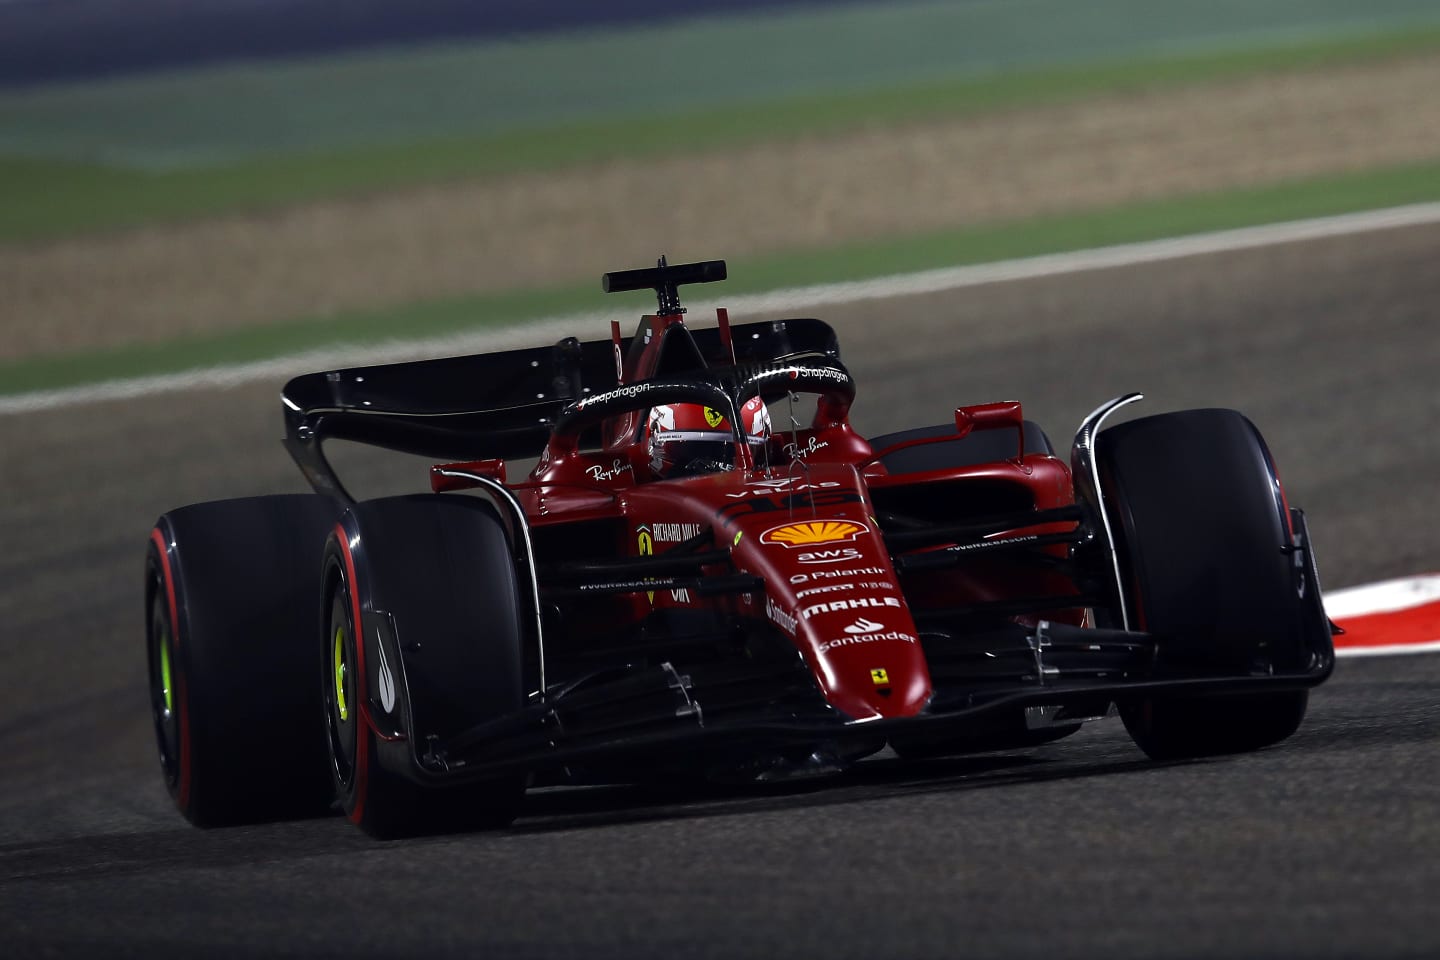 BAHRAIN, BAHRAIN - MARCH 20: Charles Leclerc of Monaco driving (16) the Ferrari F1-75 on track